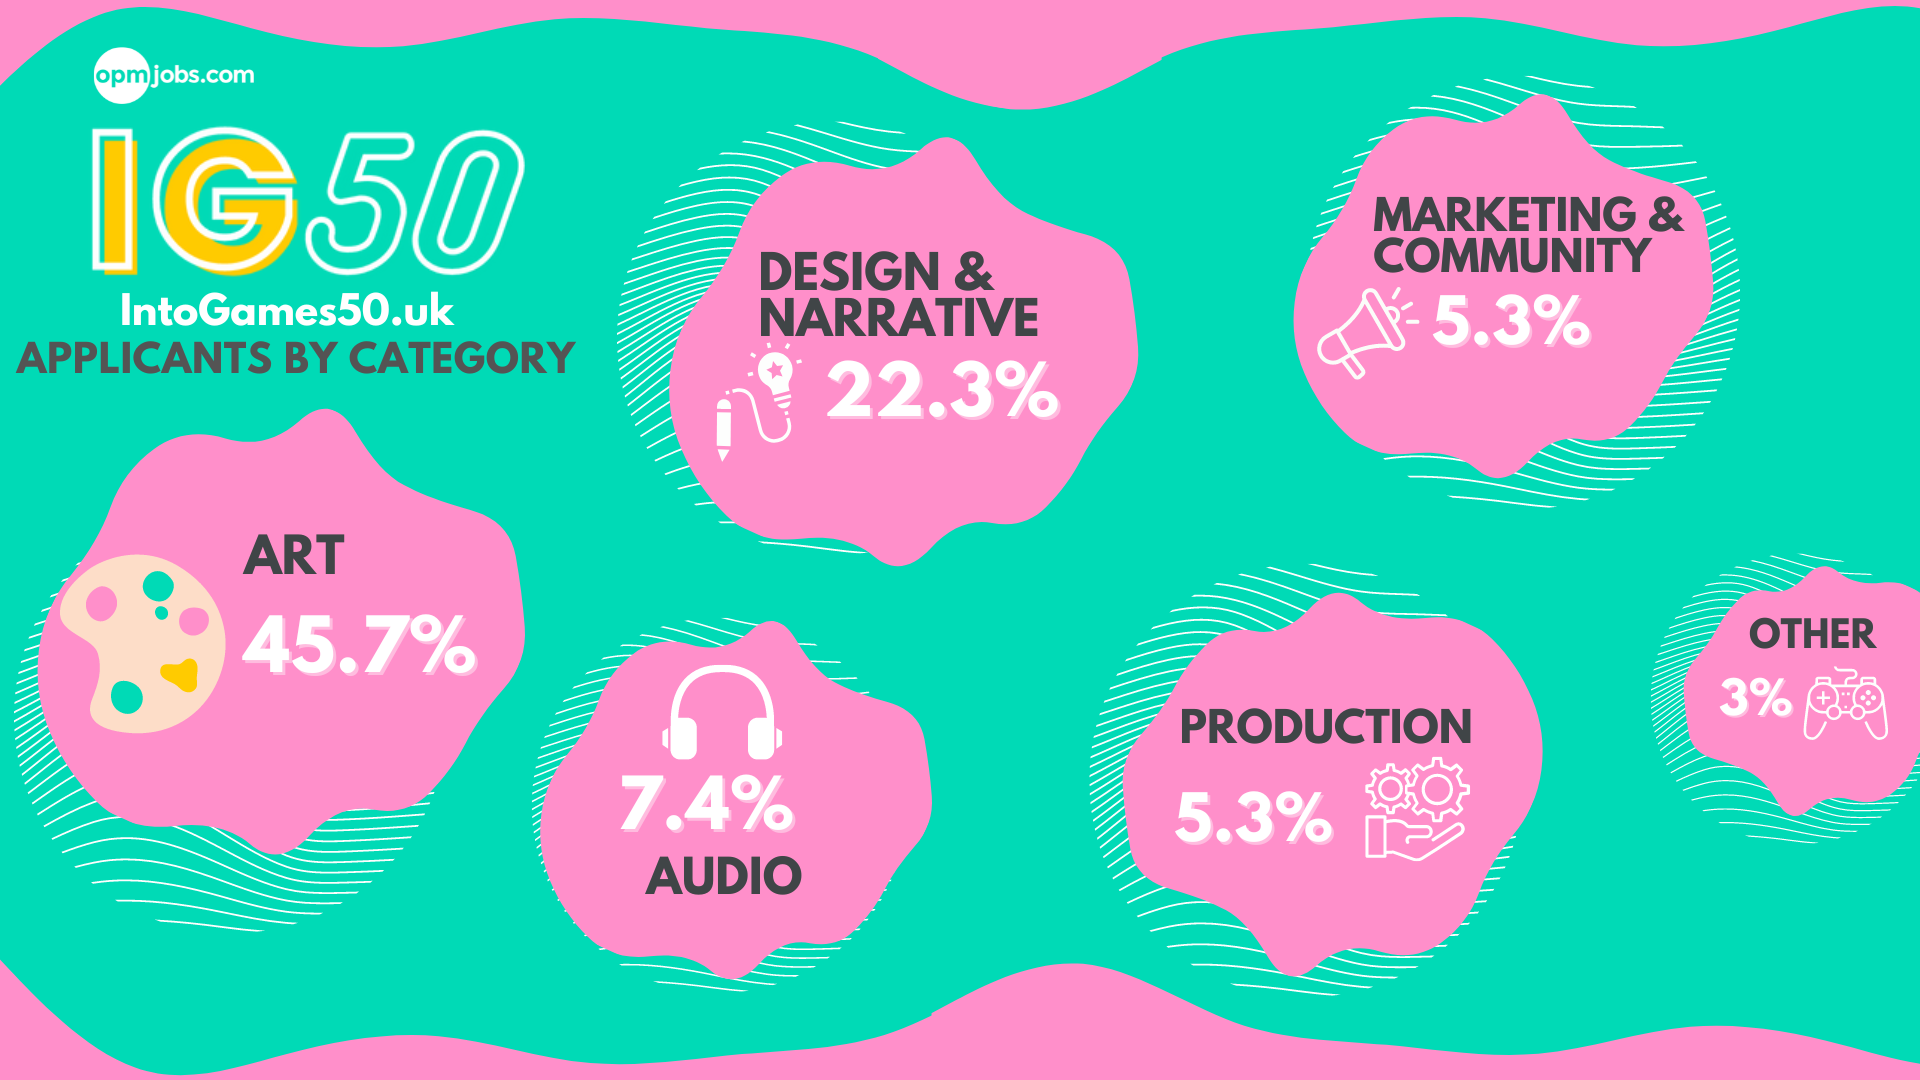 Breakdown of IG50 applicants by category: Art = 45.7% of applicants, Design & Narrative = 22.3% of applicants, Audio = 7.4% of applicants, Marketing & Community = 5.3% of applicants, Production = 5.3% of applicants, Other = 3% of applicants. 